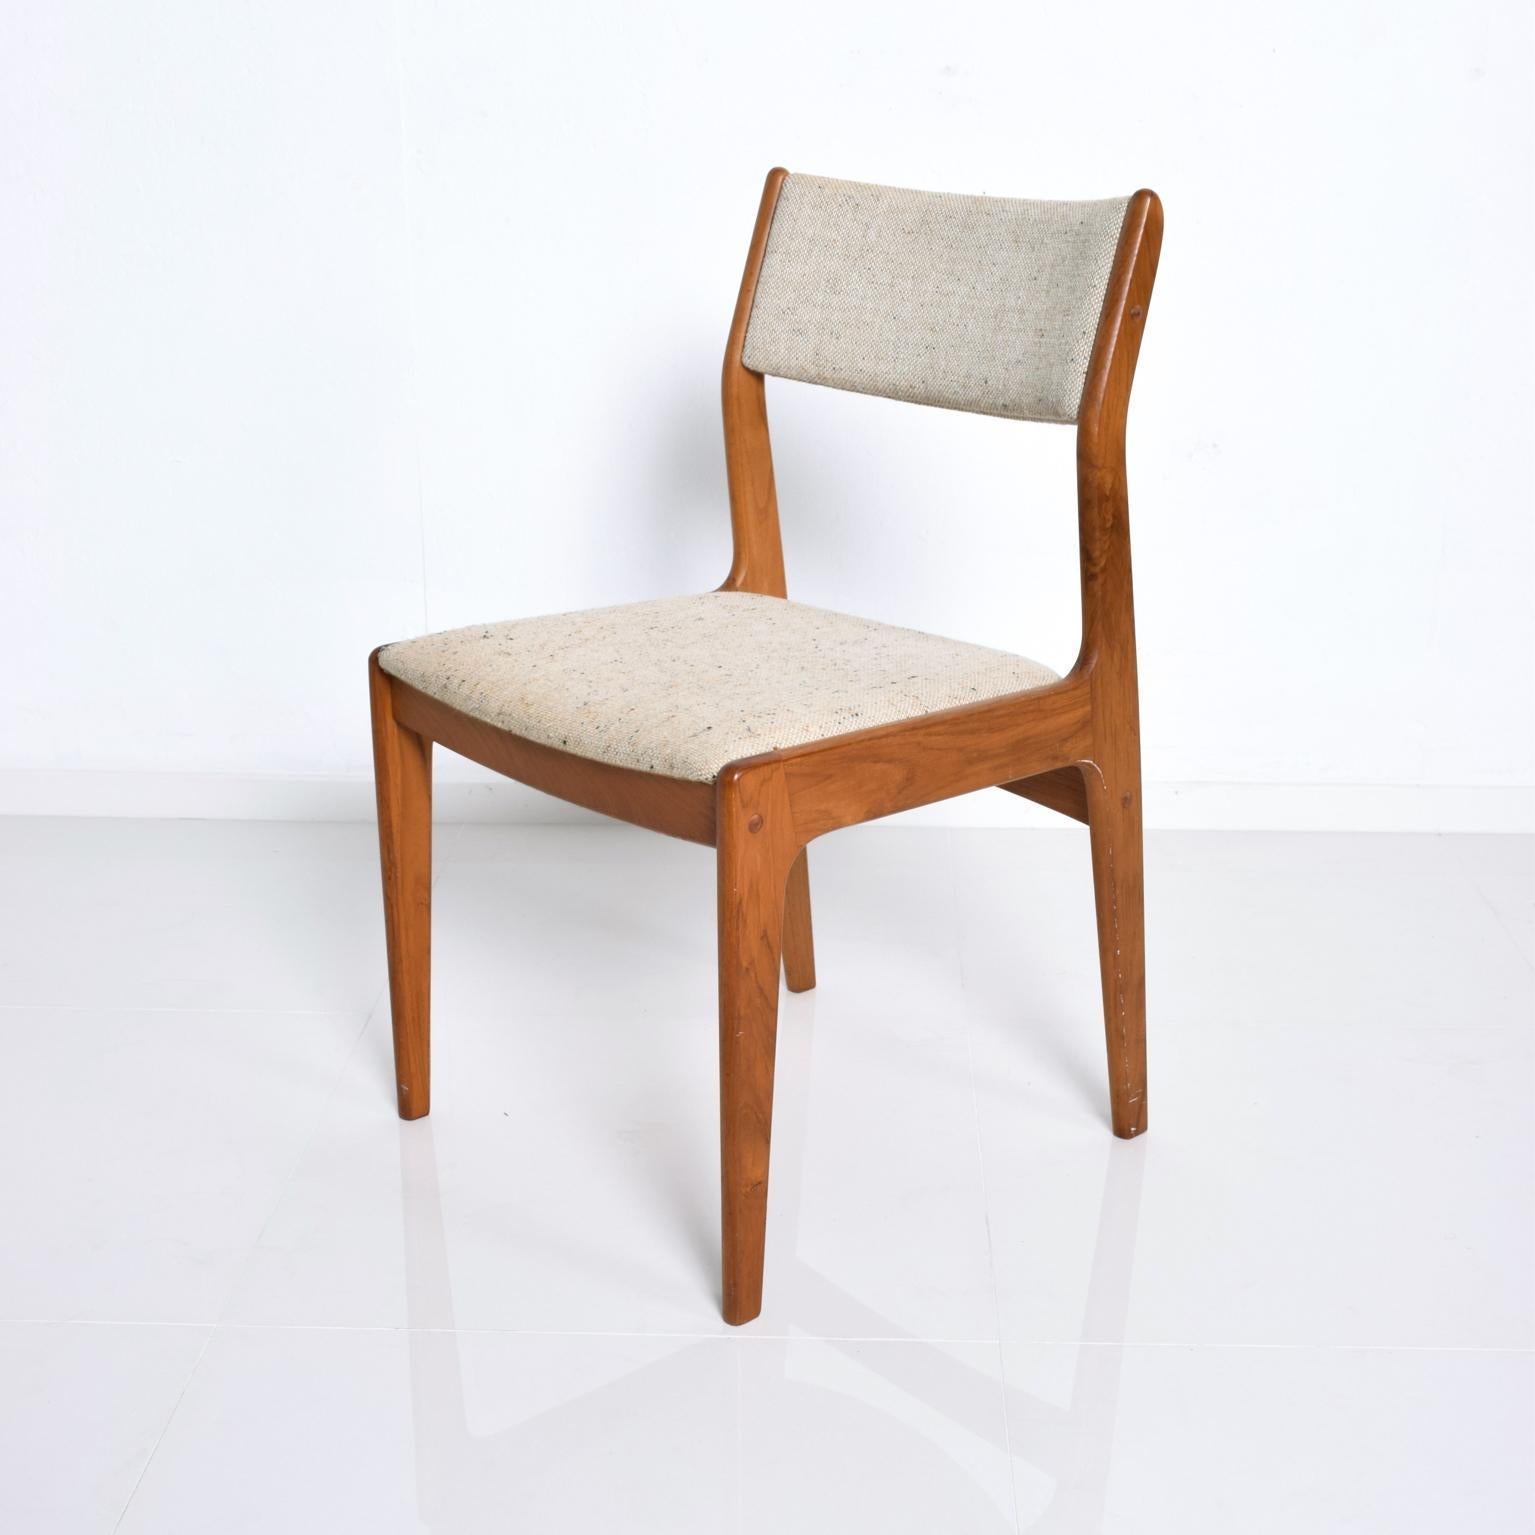 Oiled Midcentury Danish Modern Benny Linden Teak Dining Chairs, Set of 4